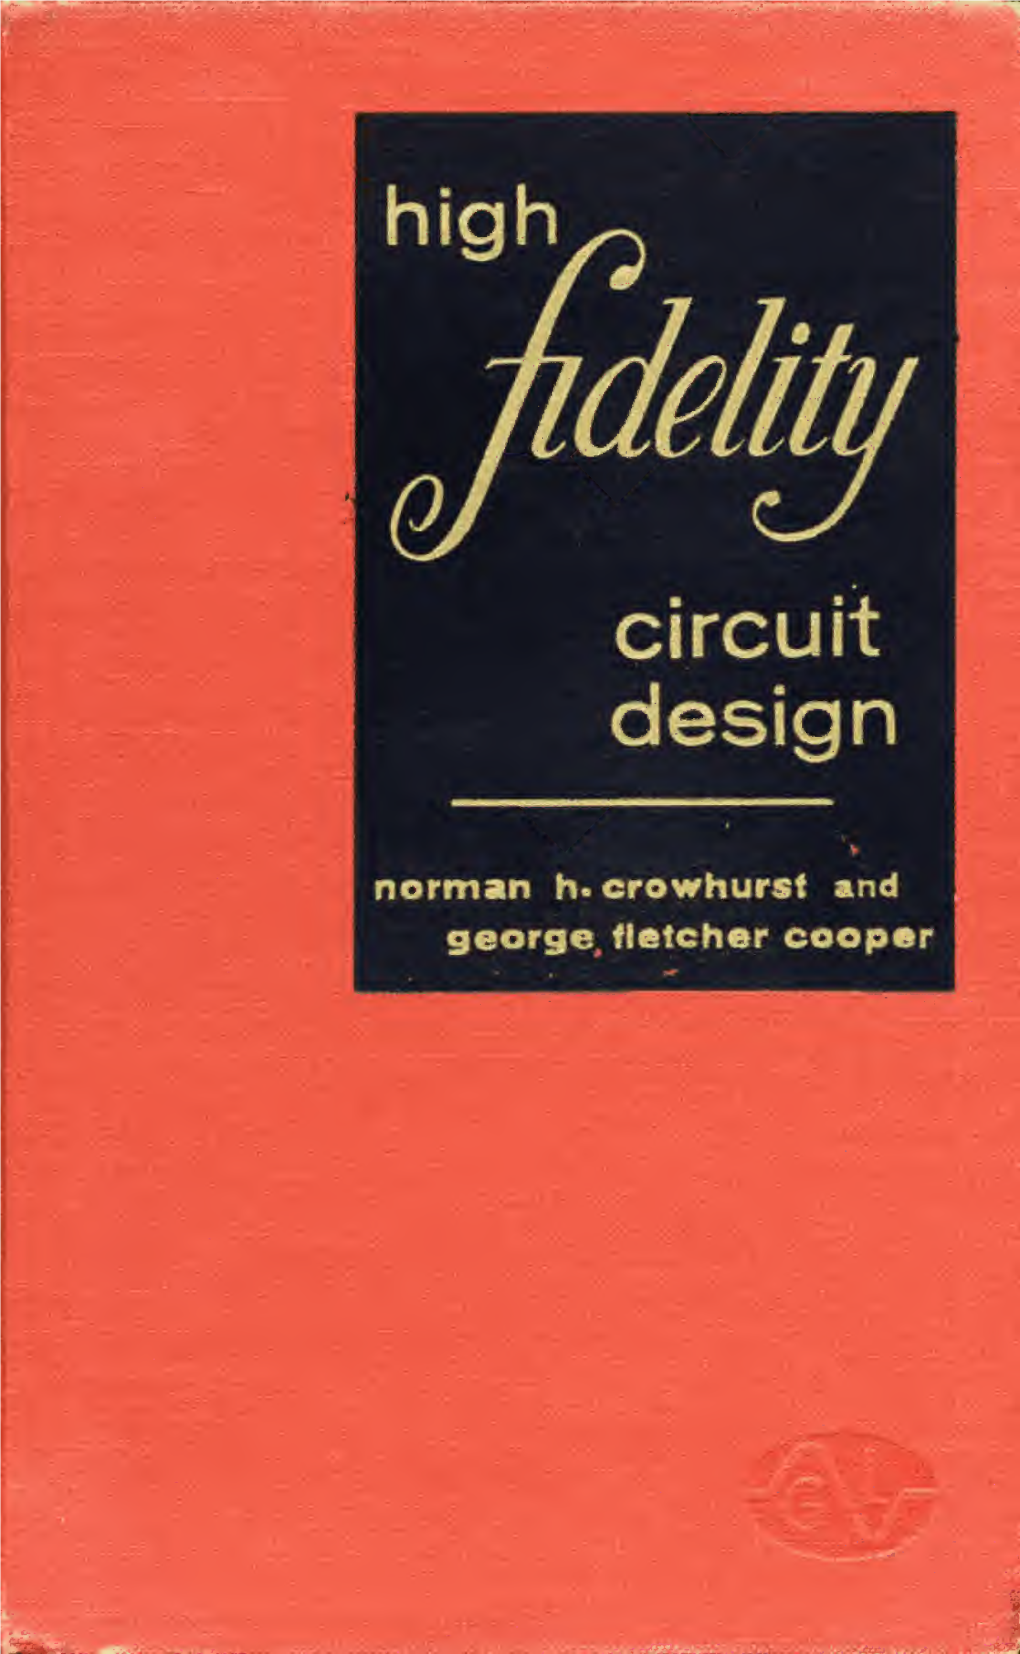 High Fidelity Circuit Design